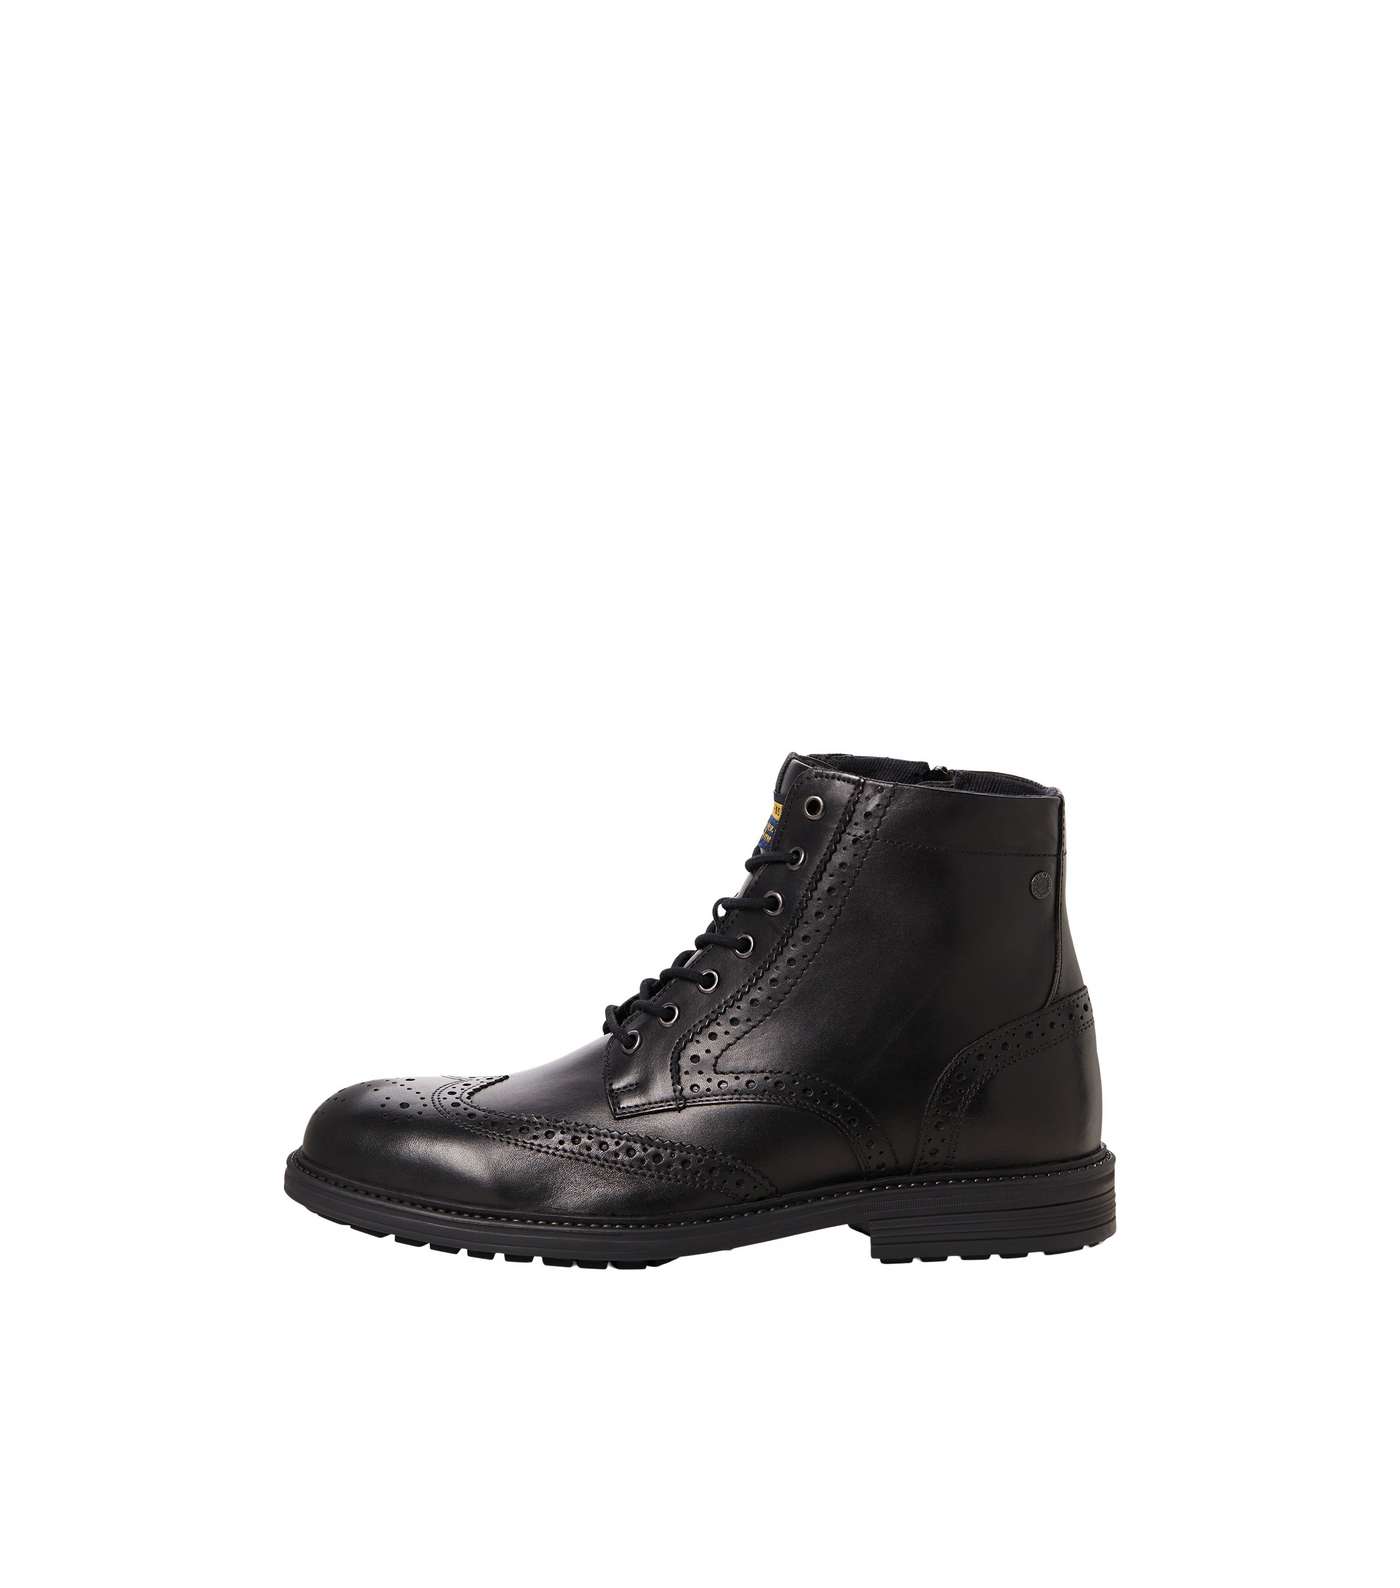 Jack & Jones Black Leather-Look Brogue Lace Up Boots Image 3